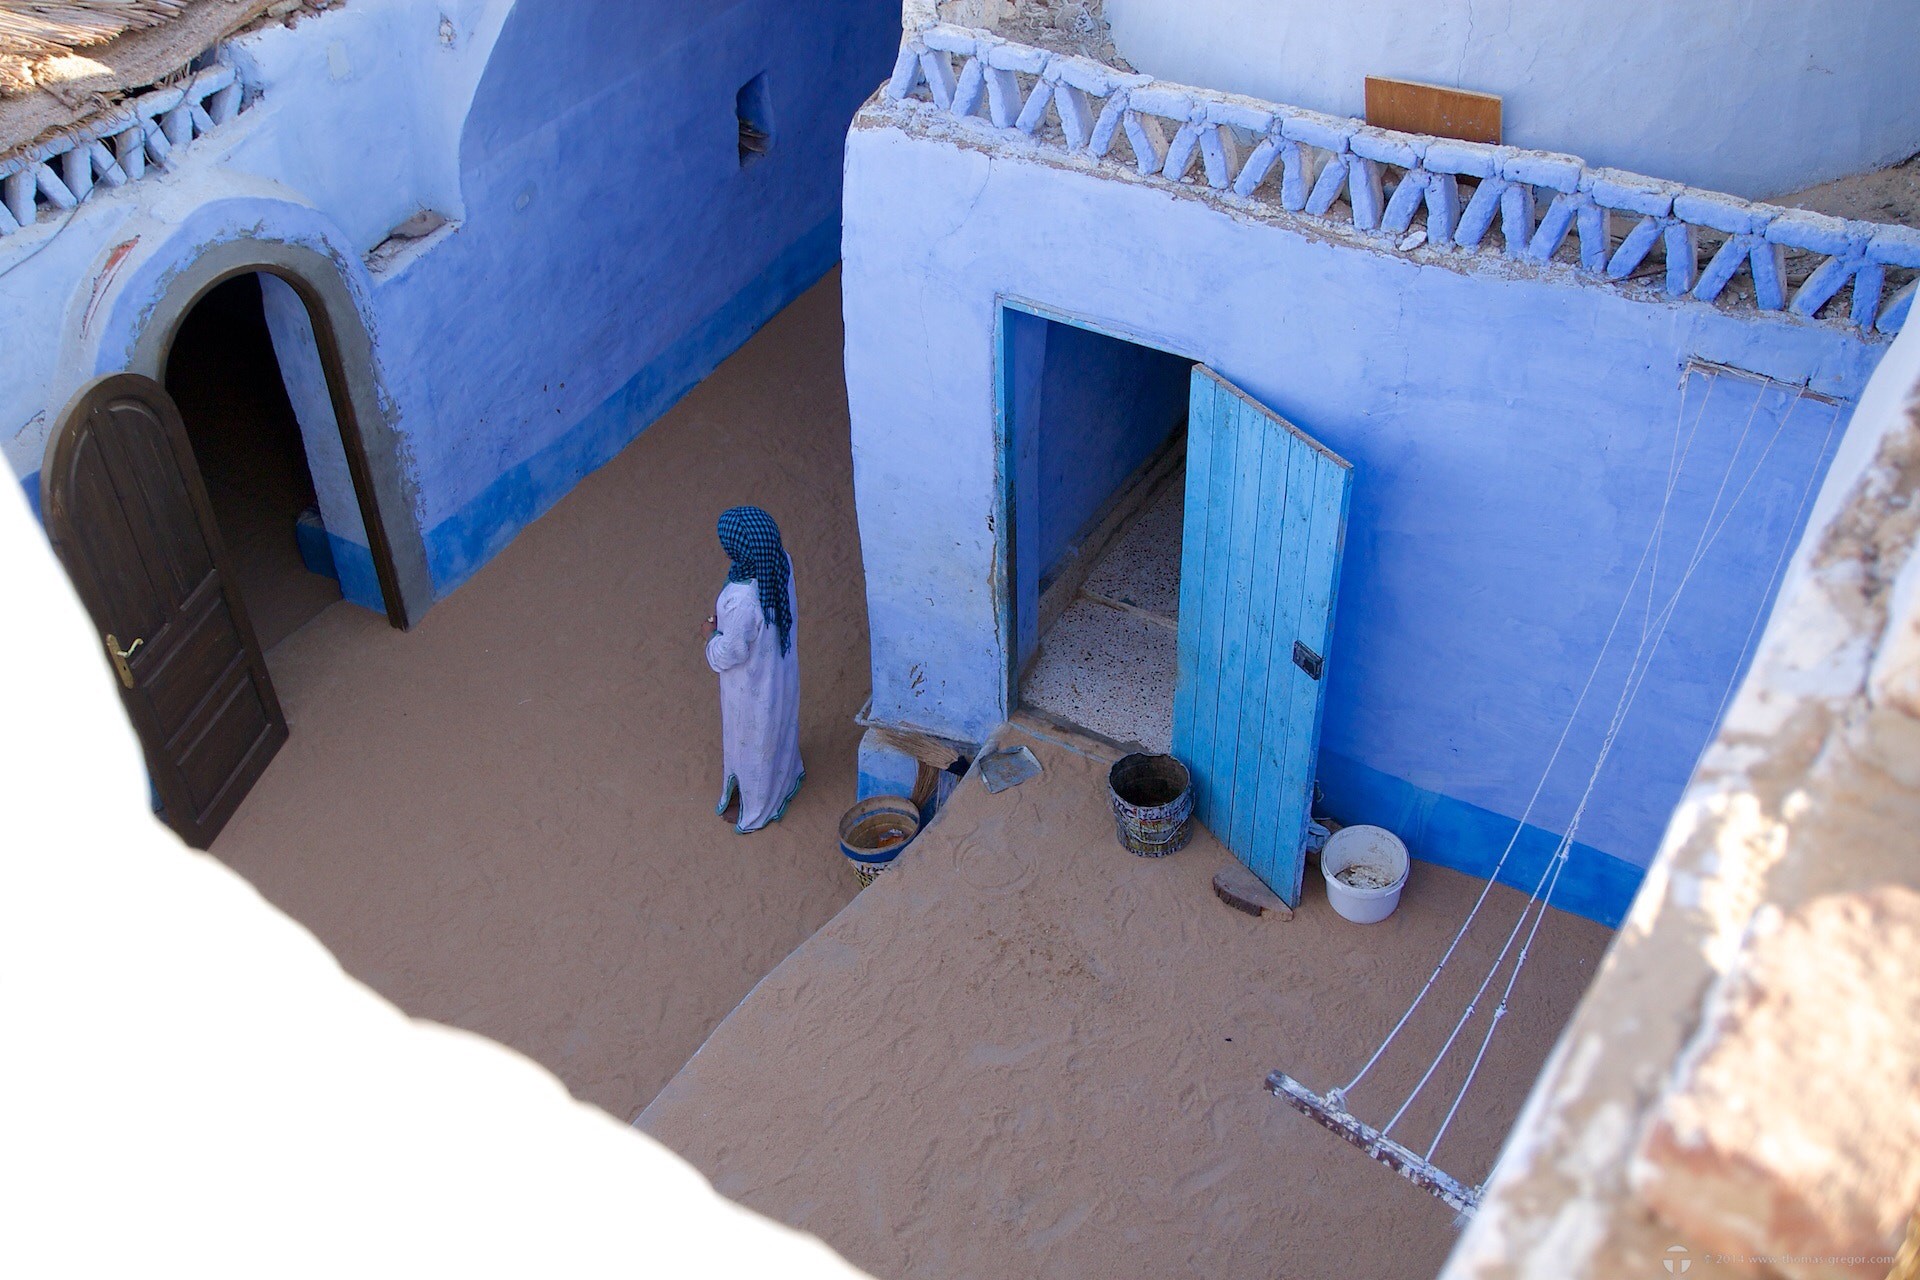 Tour to Nubian Village from Aswan